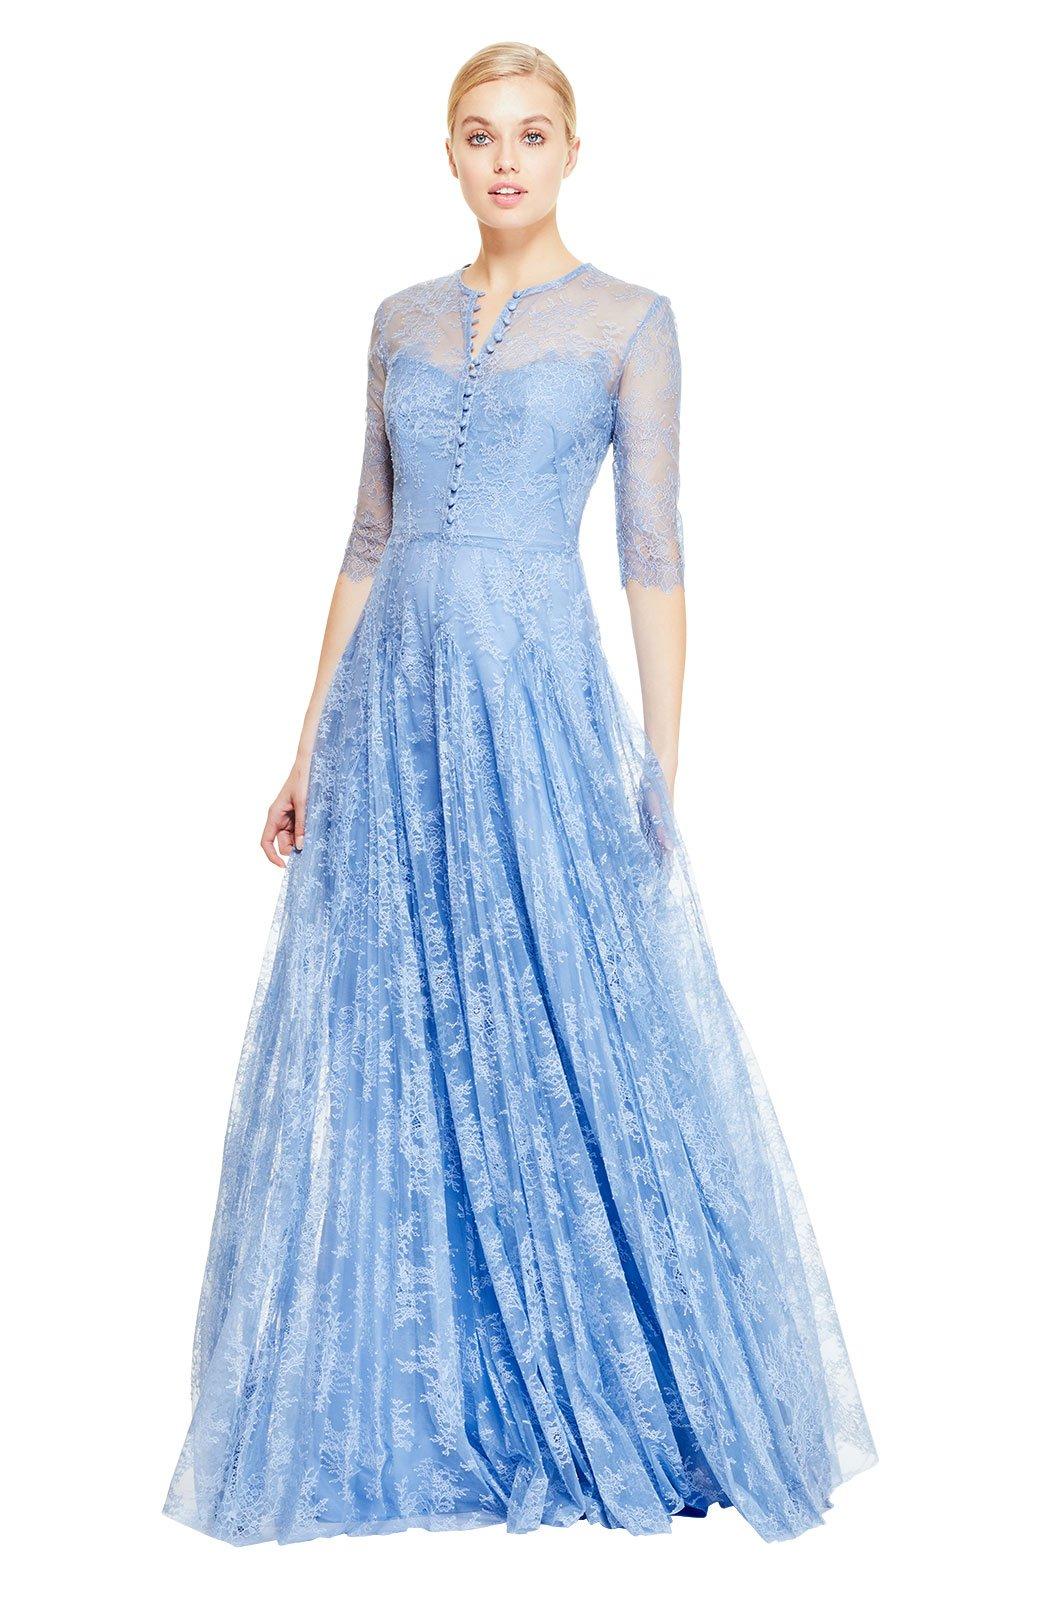 powder blue long sleeve dress